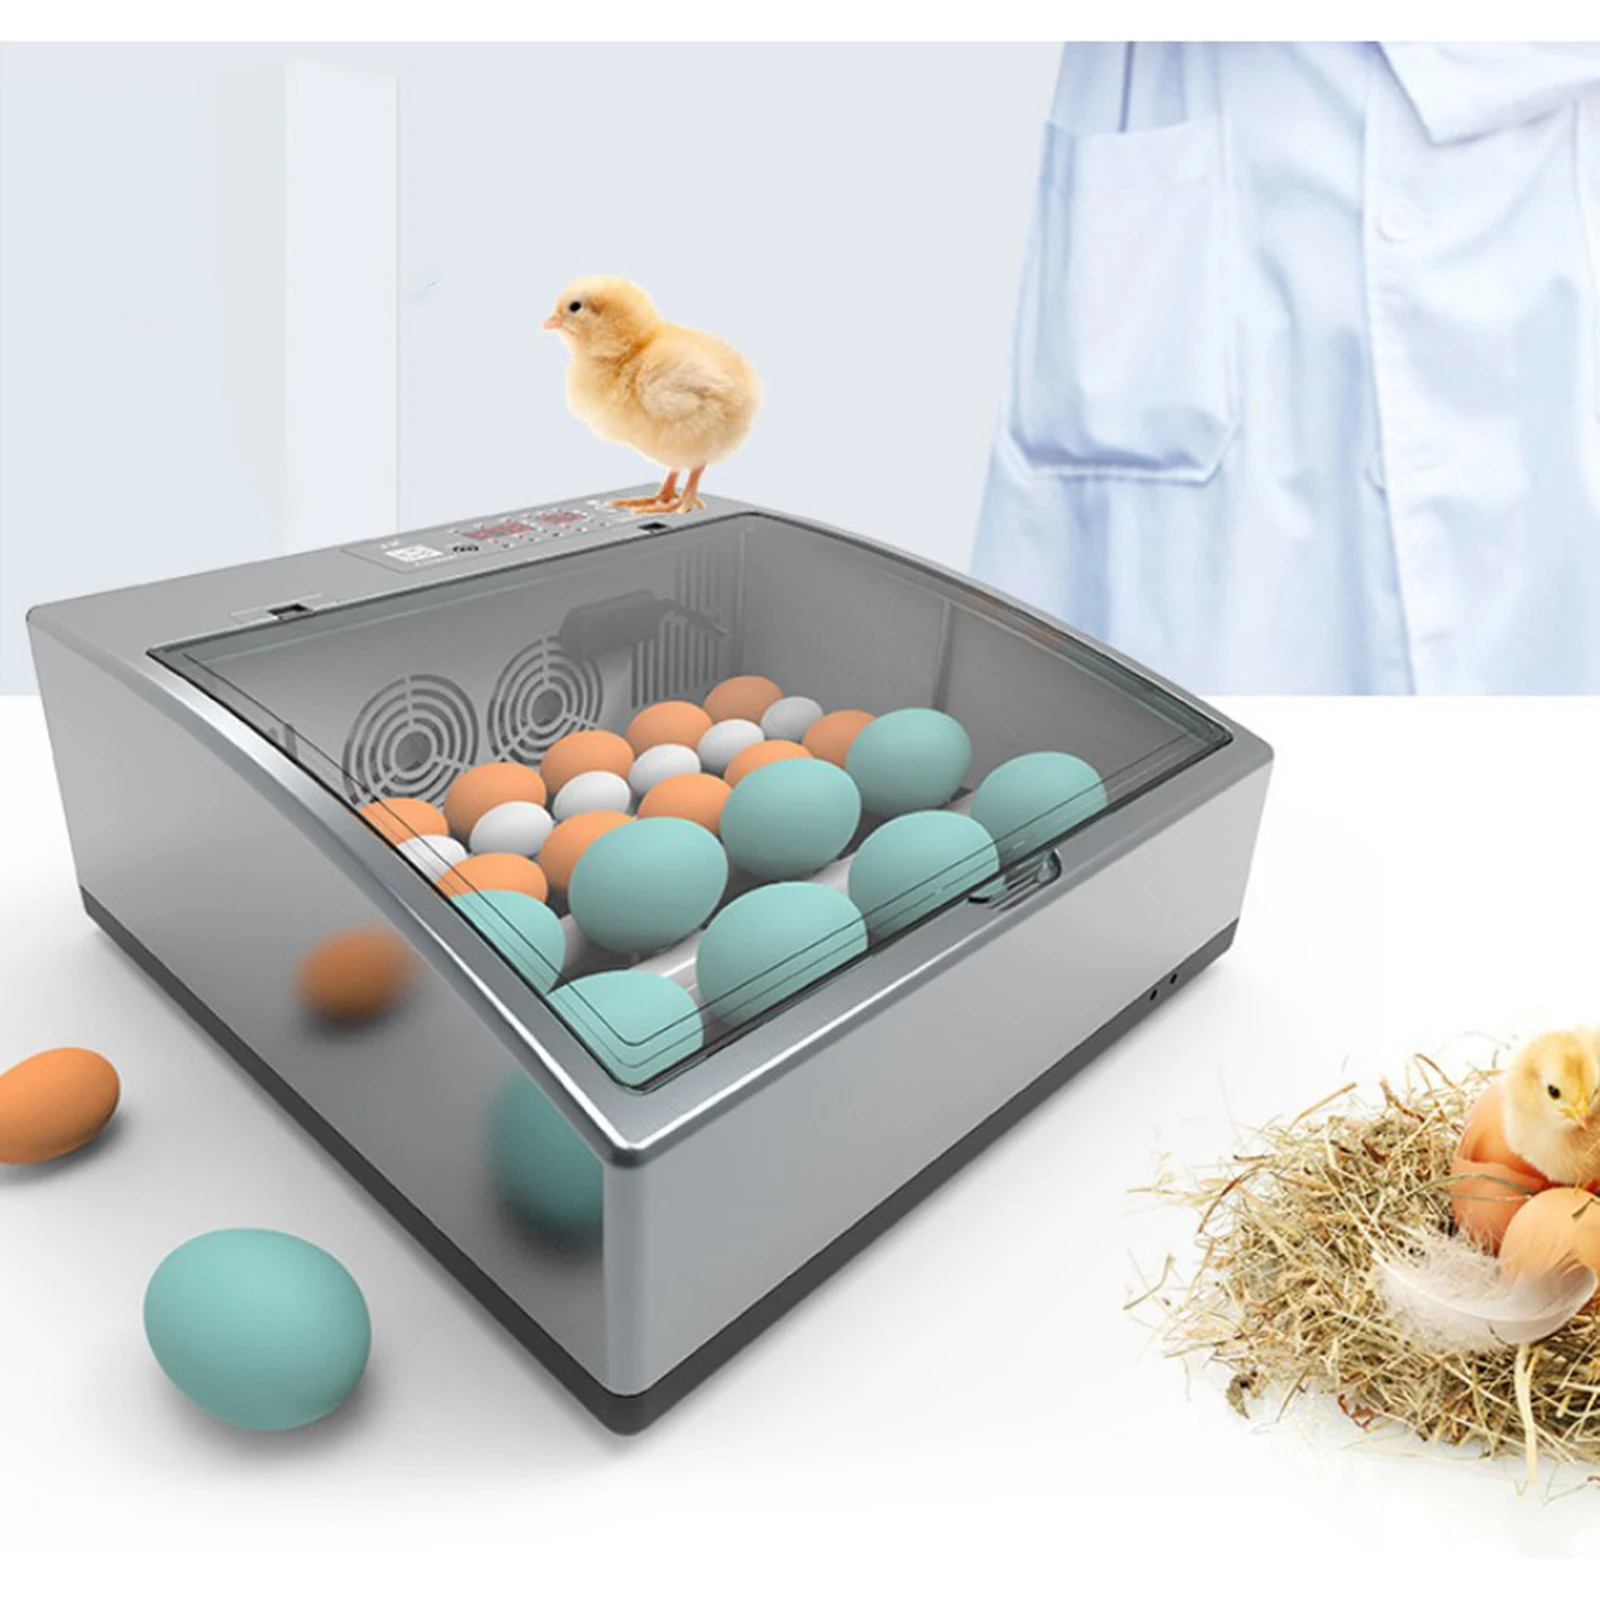 US 110V Eggs Incubator Brooder Bird Quail Chick Hatchery Incubator Poultry Hatcher Turner Automatic Farm Incubation Tools